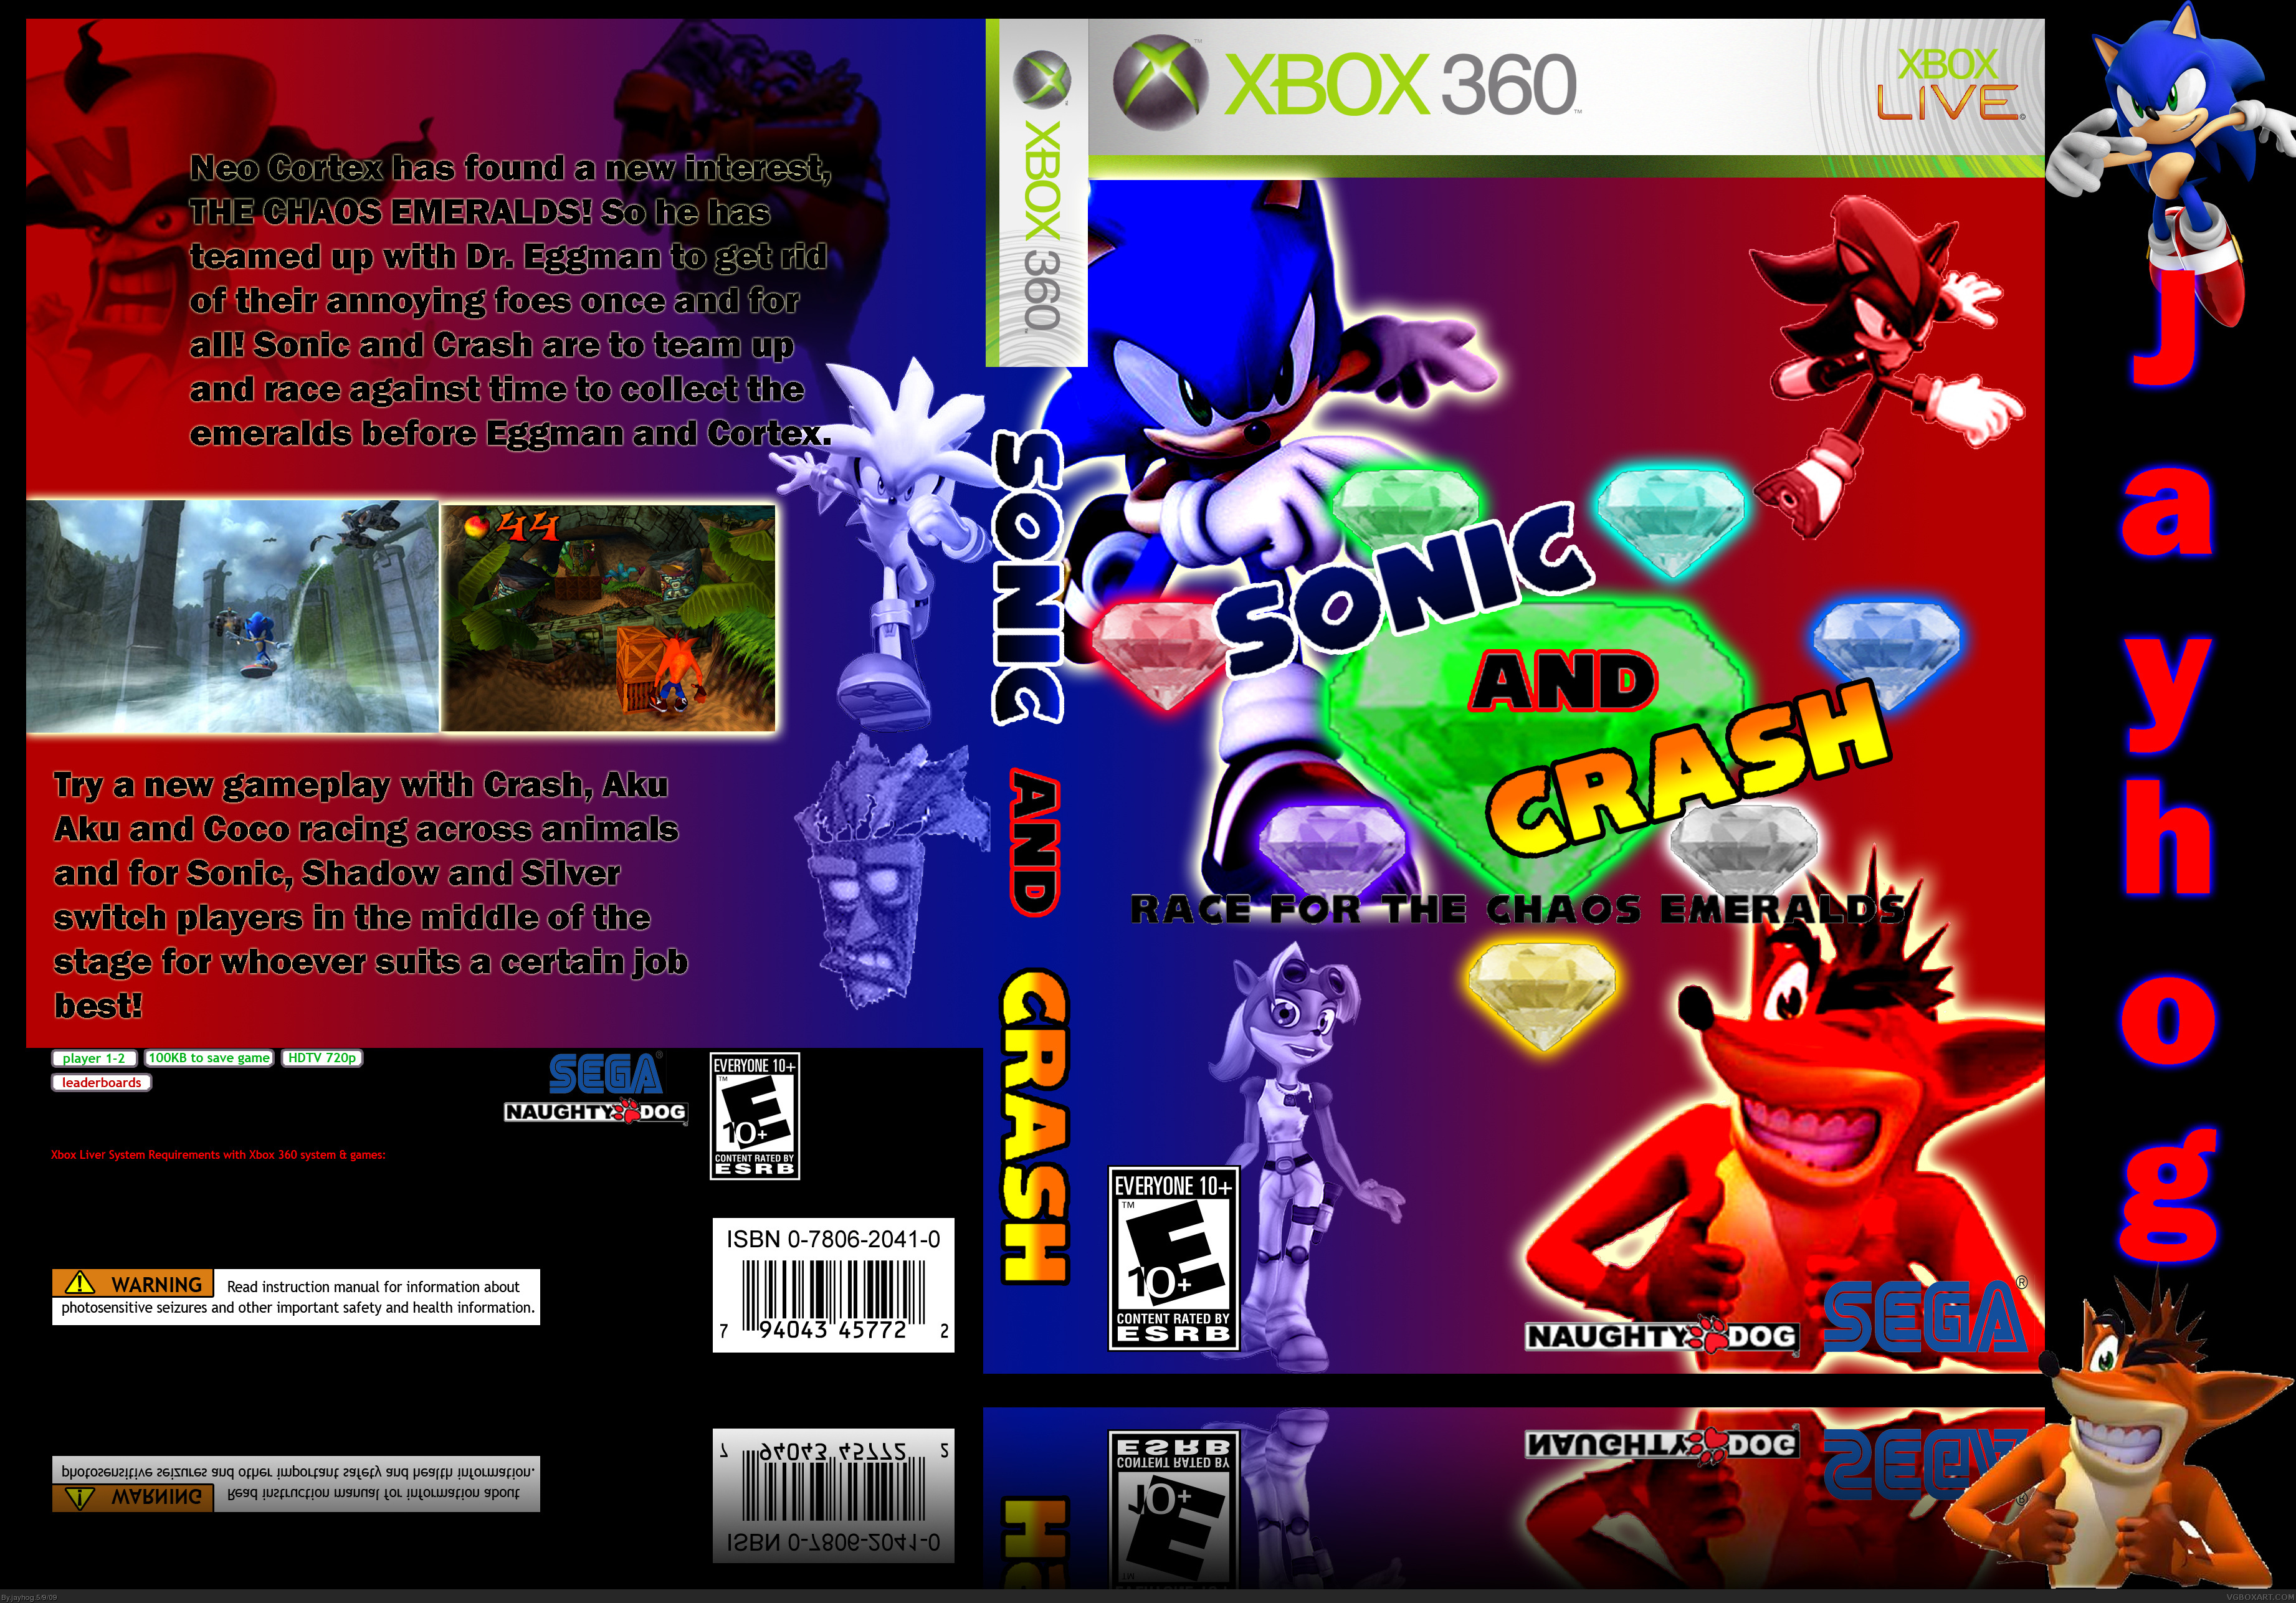 Sonic The Hedgehog & Crash Bandicoot box cover